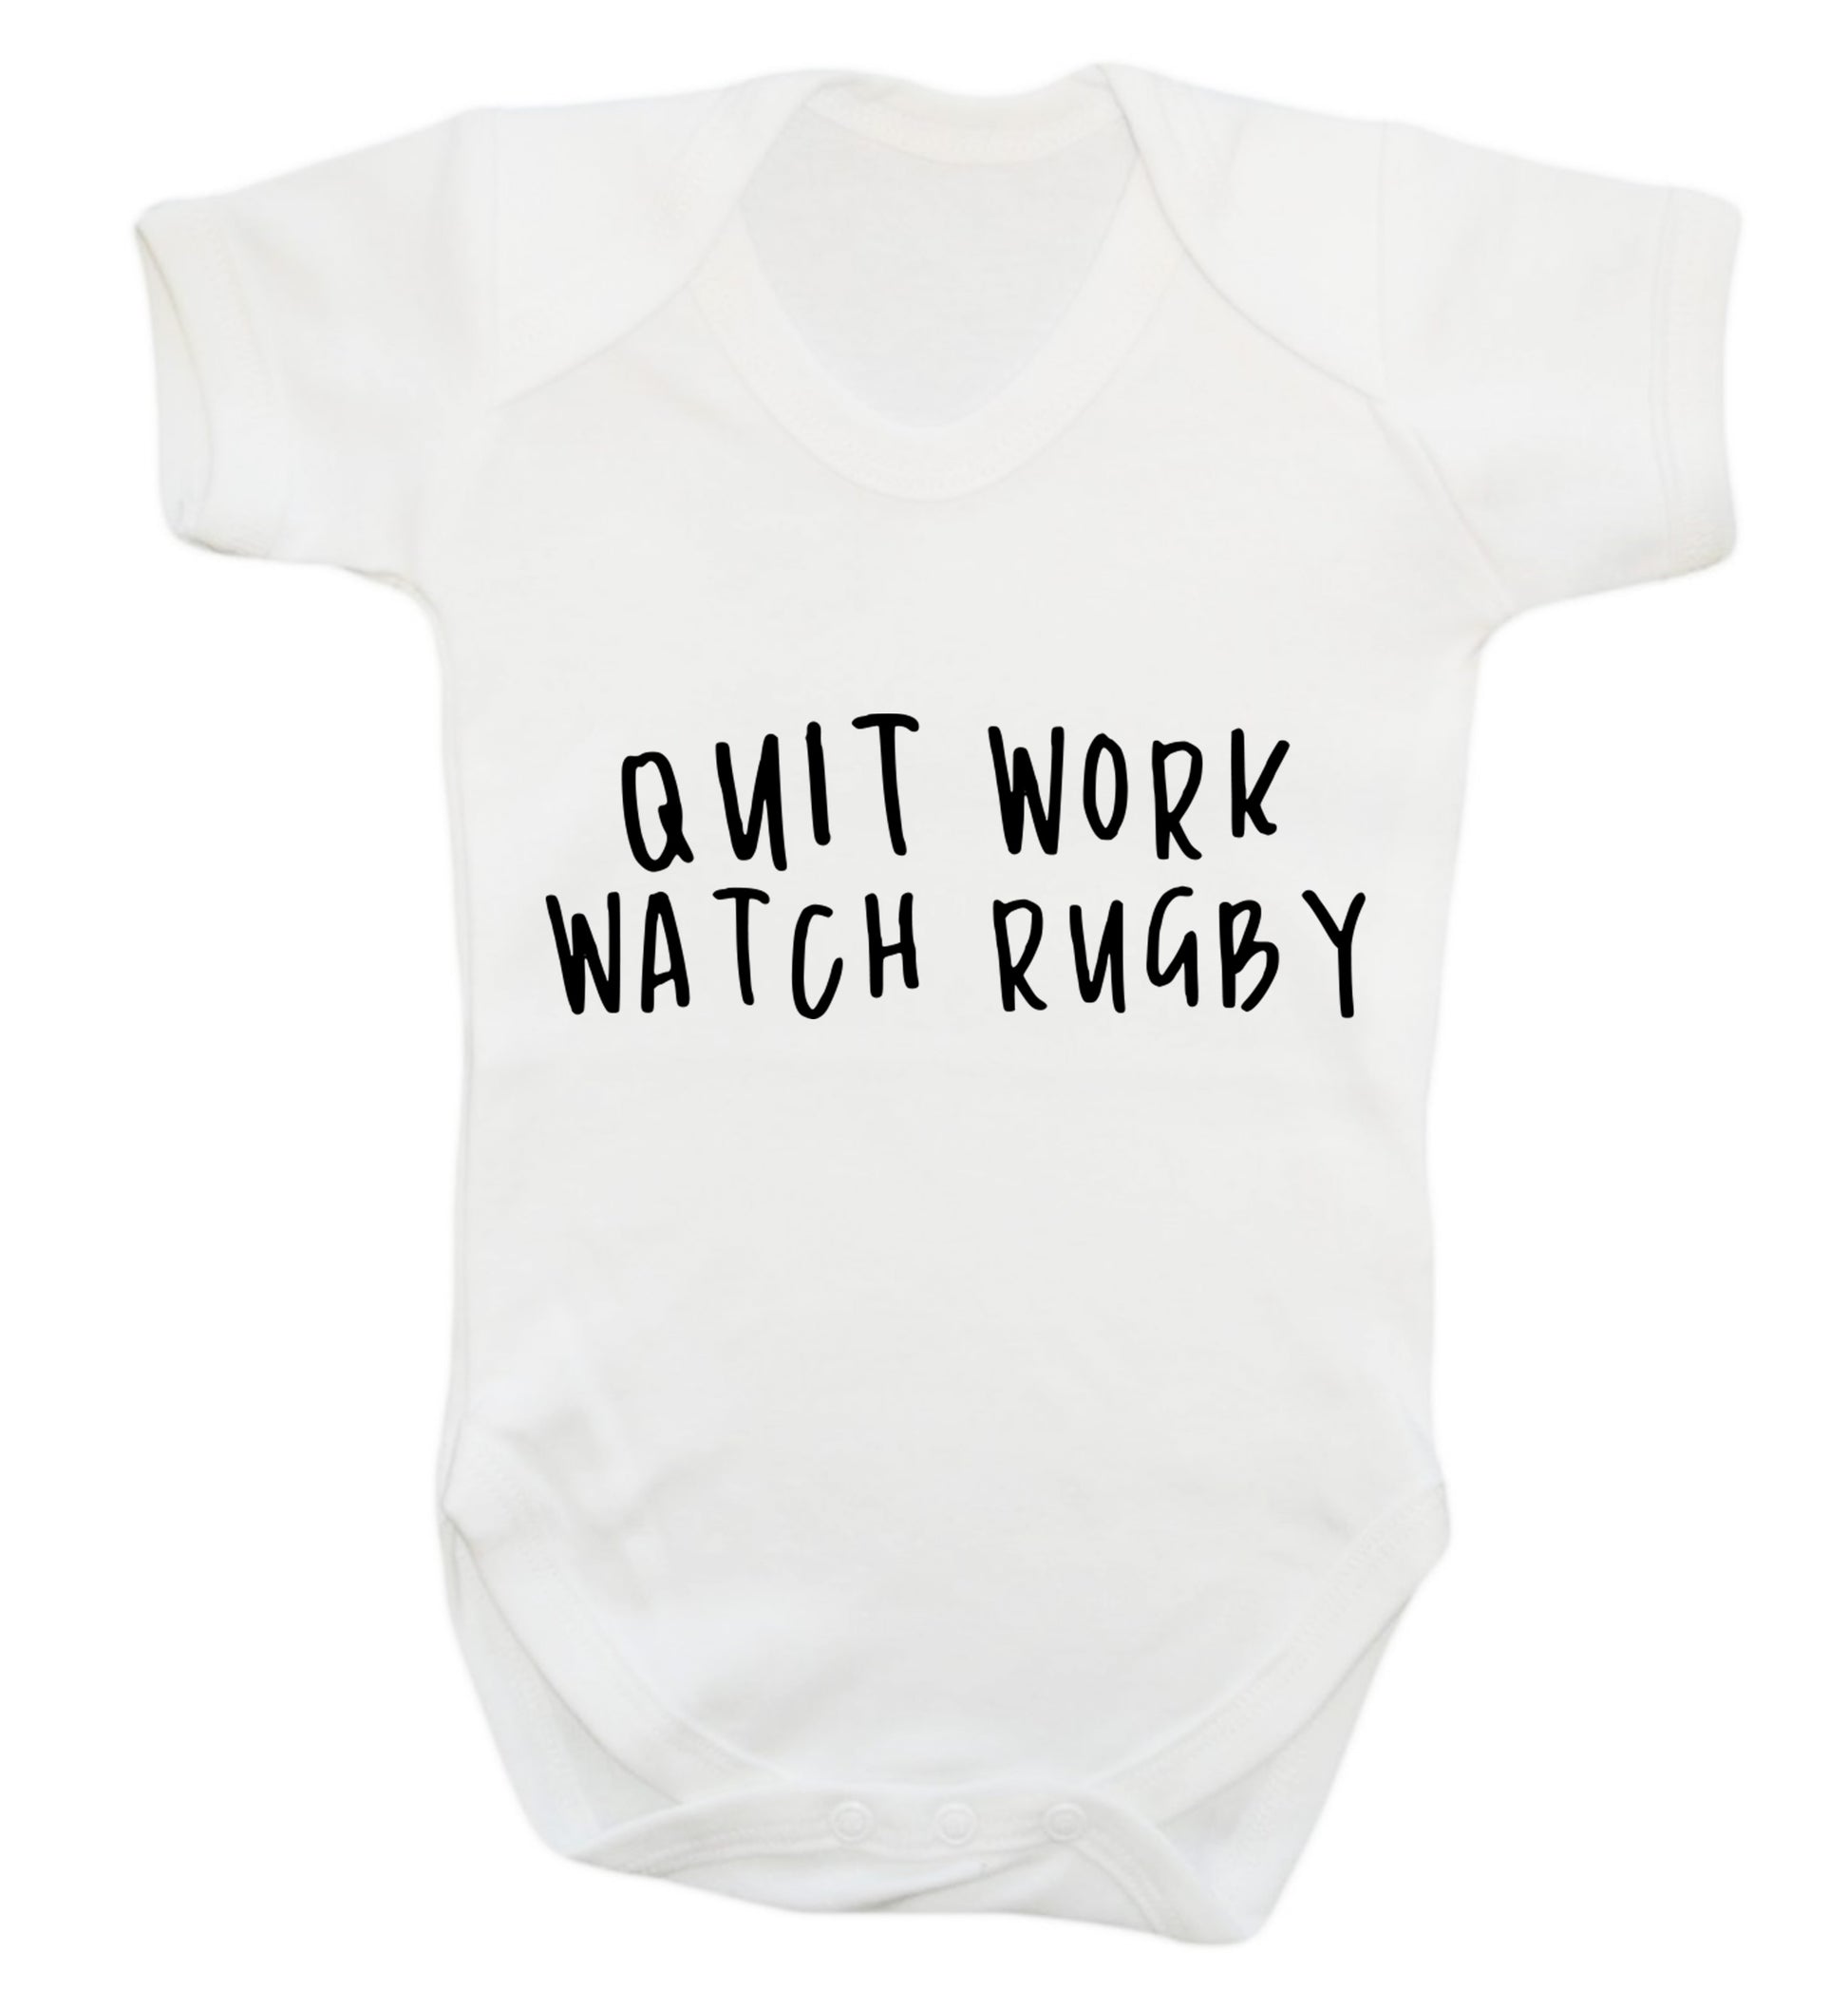 Quit work watch rugby Baby Vest white 18-24 months